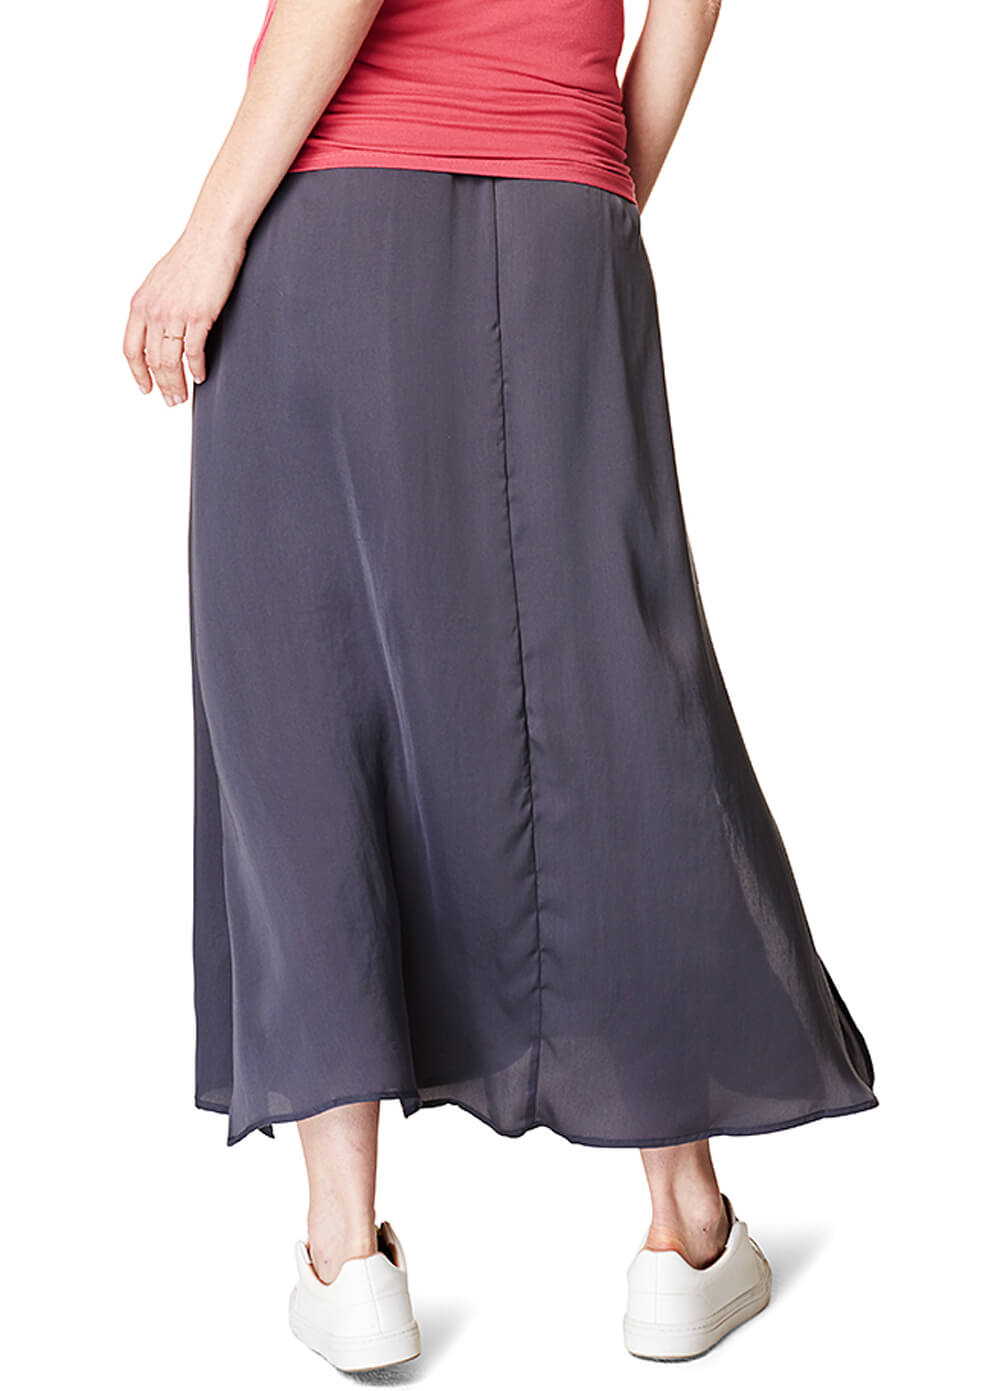 Fluid Side Split Maternity Maxi Skirt in Grey by Esprit